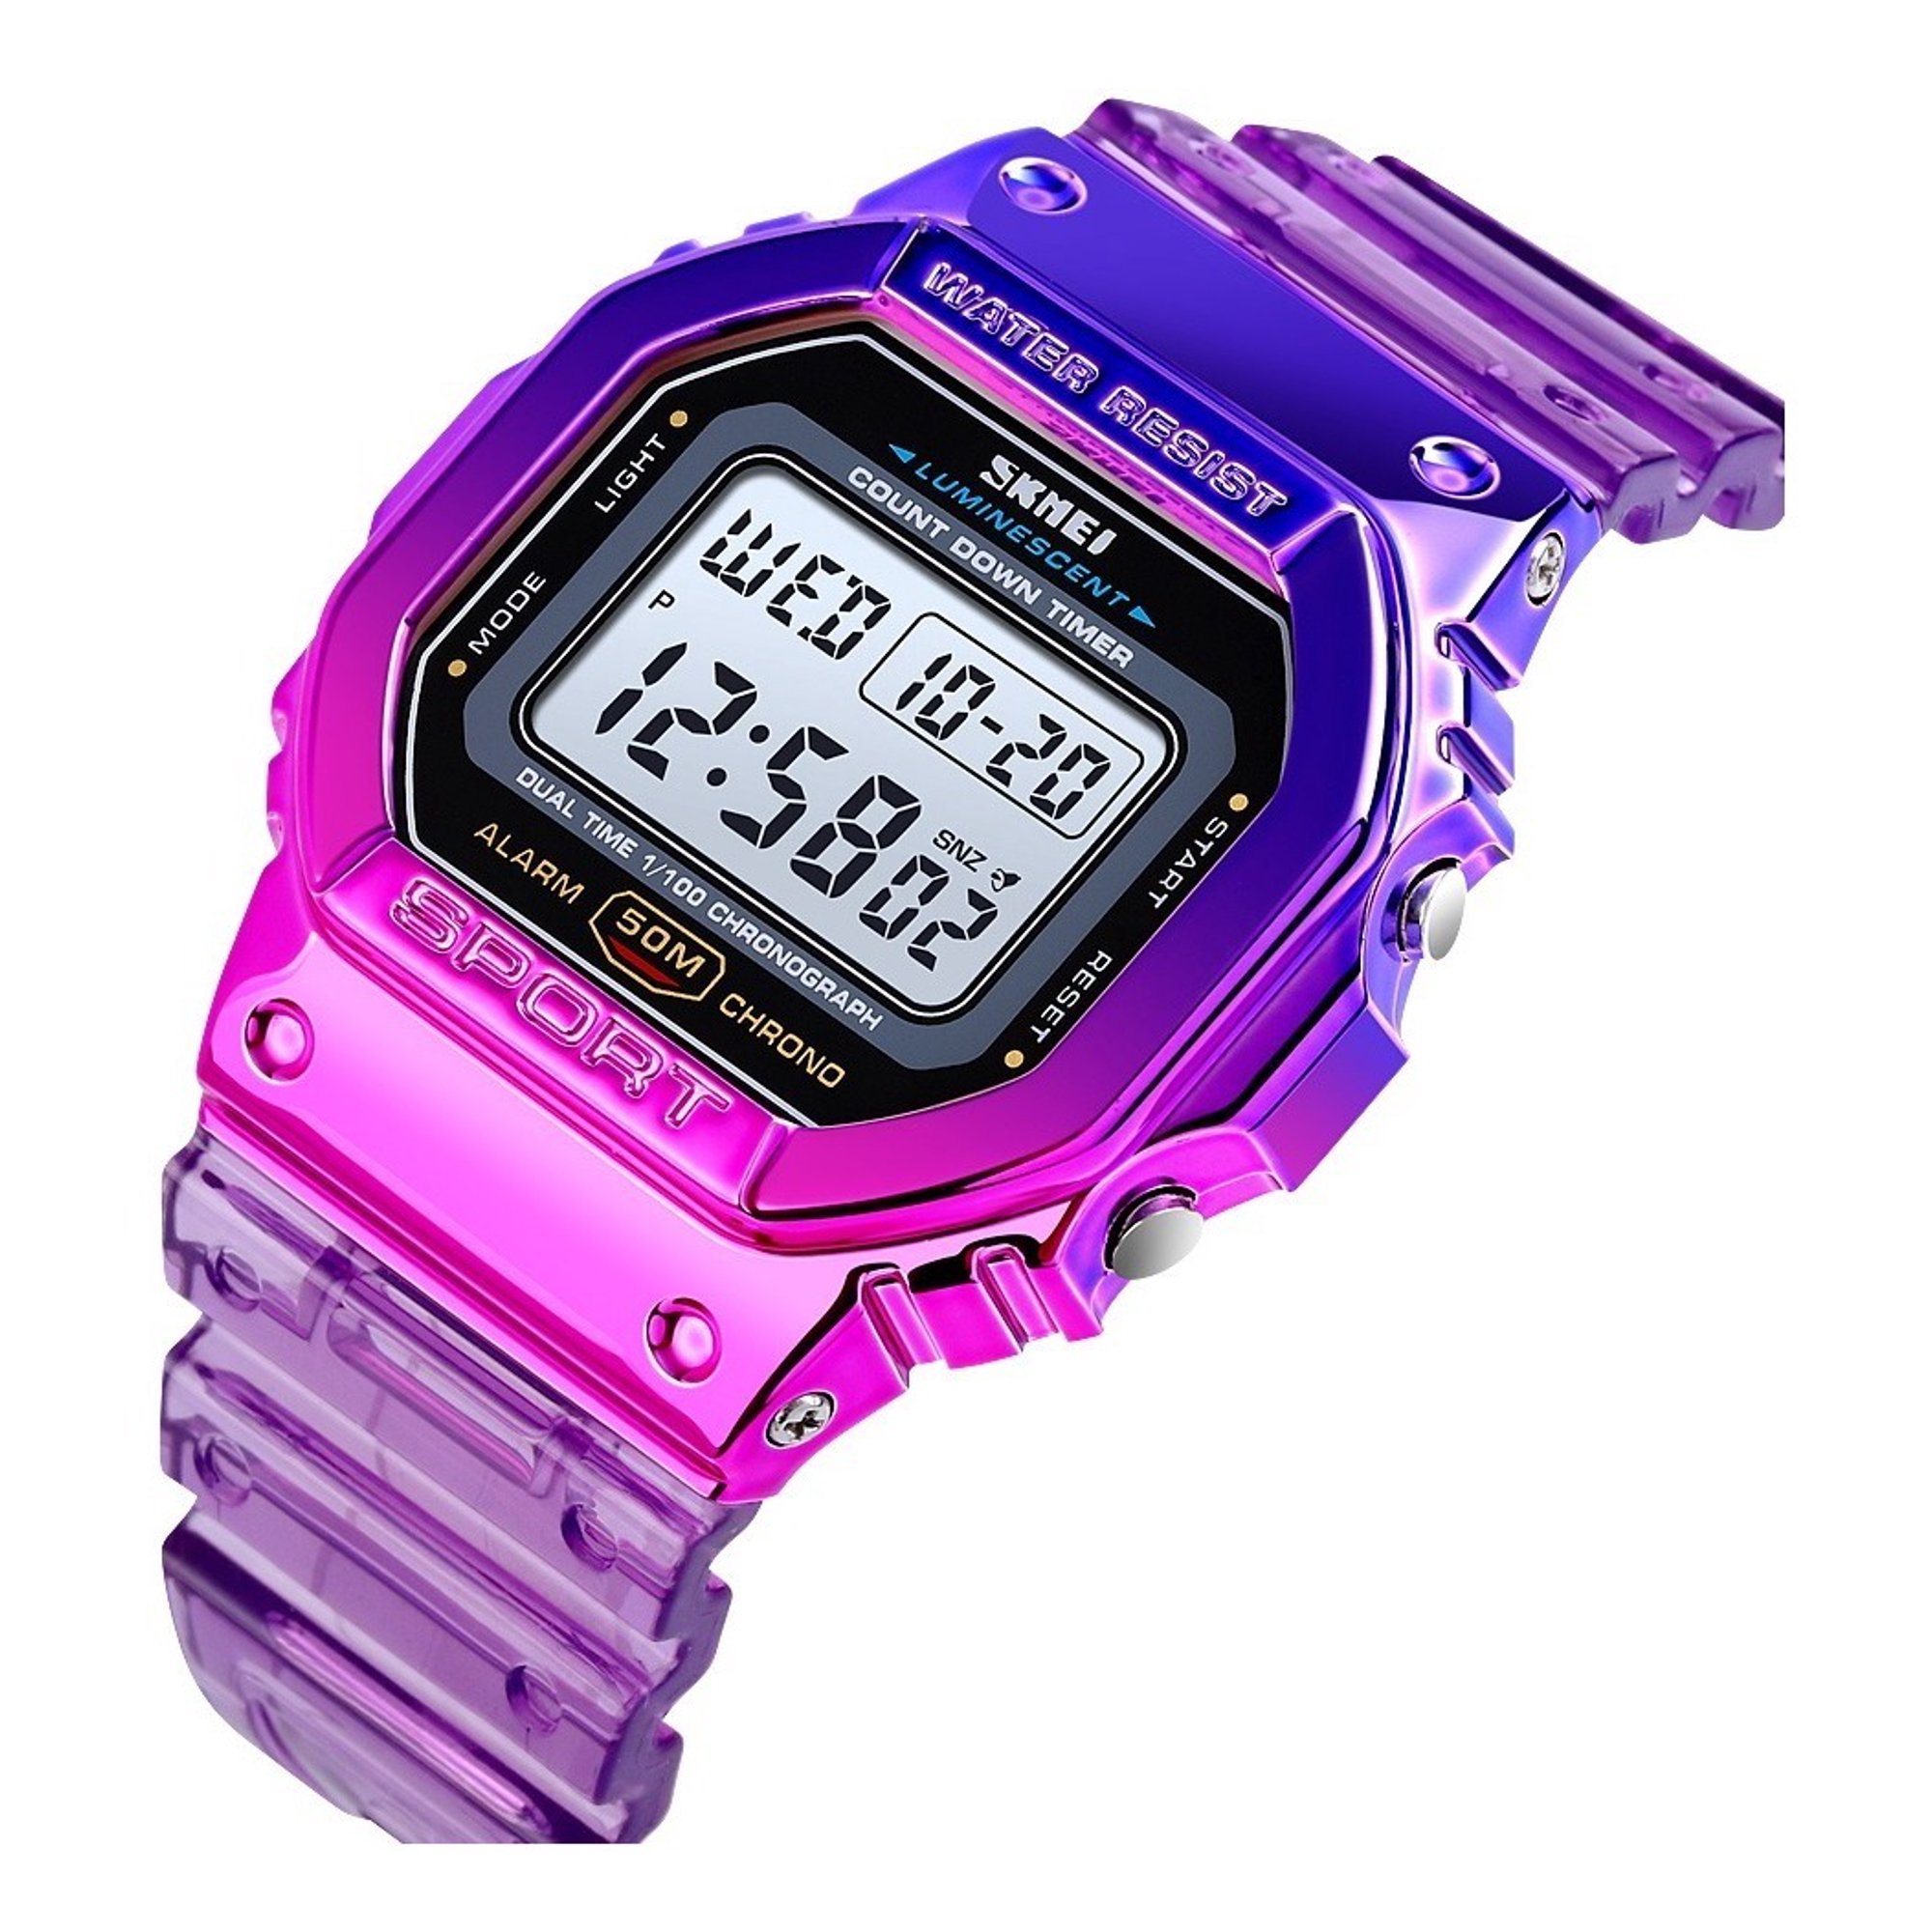 Reloj digital para mujer, reloj deportivo impermeable, analógico, militar,  táctico, retroiluminación LED, alarma, cronómetro, relojes de pulsera